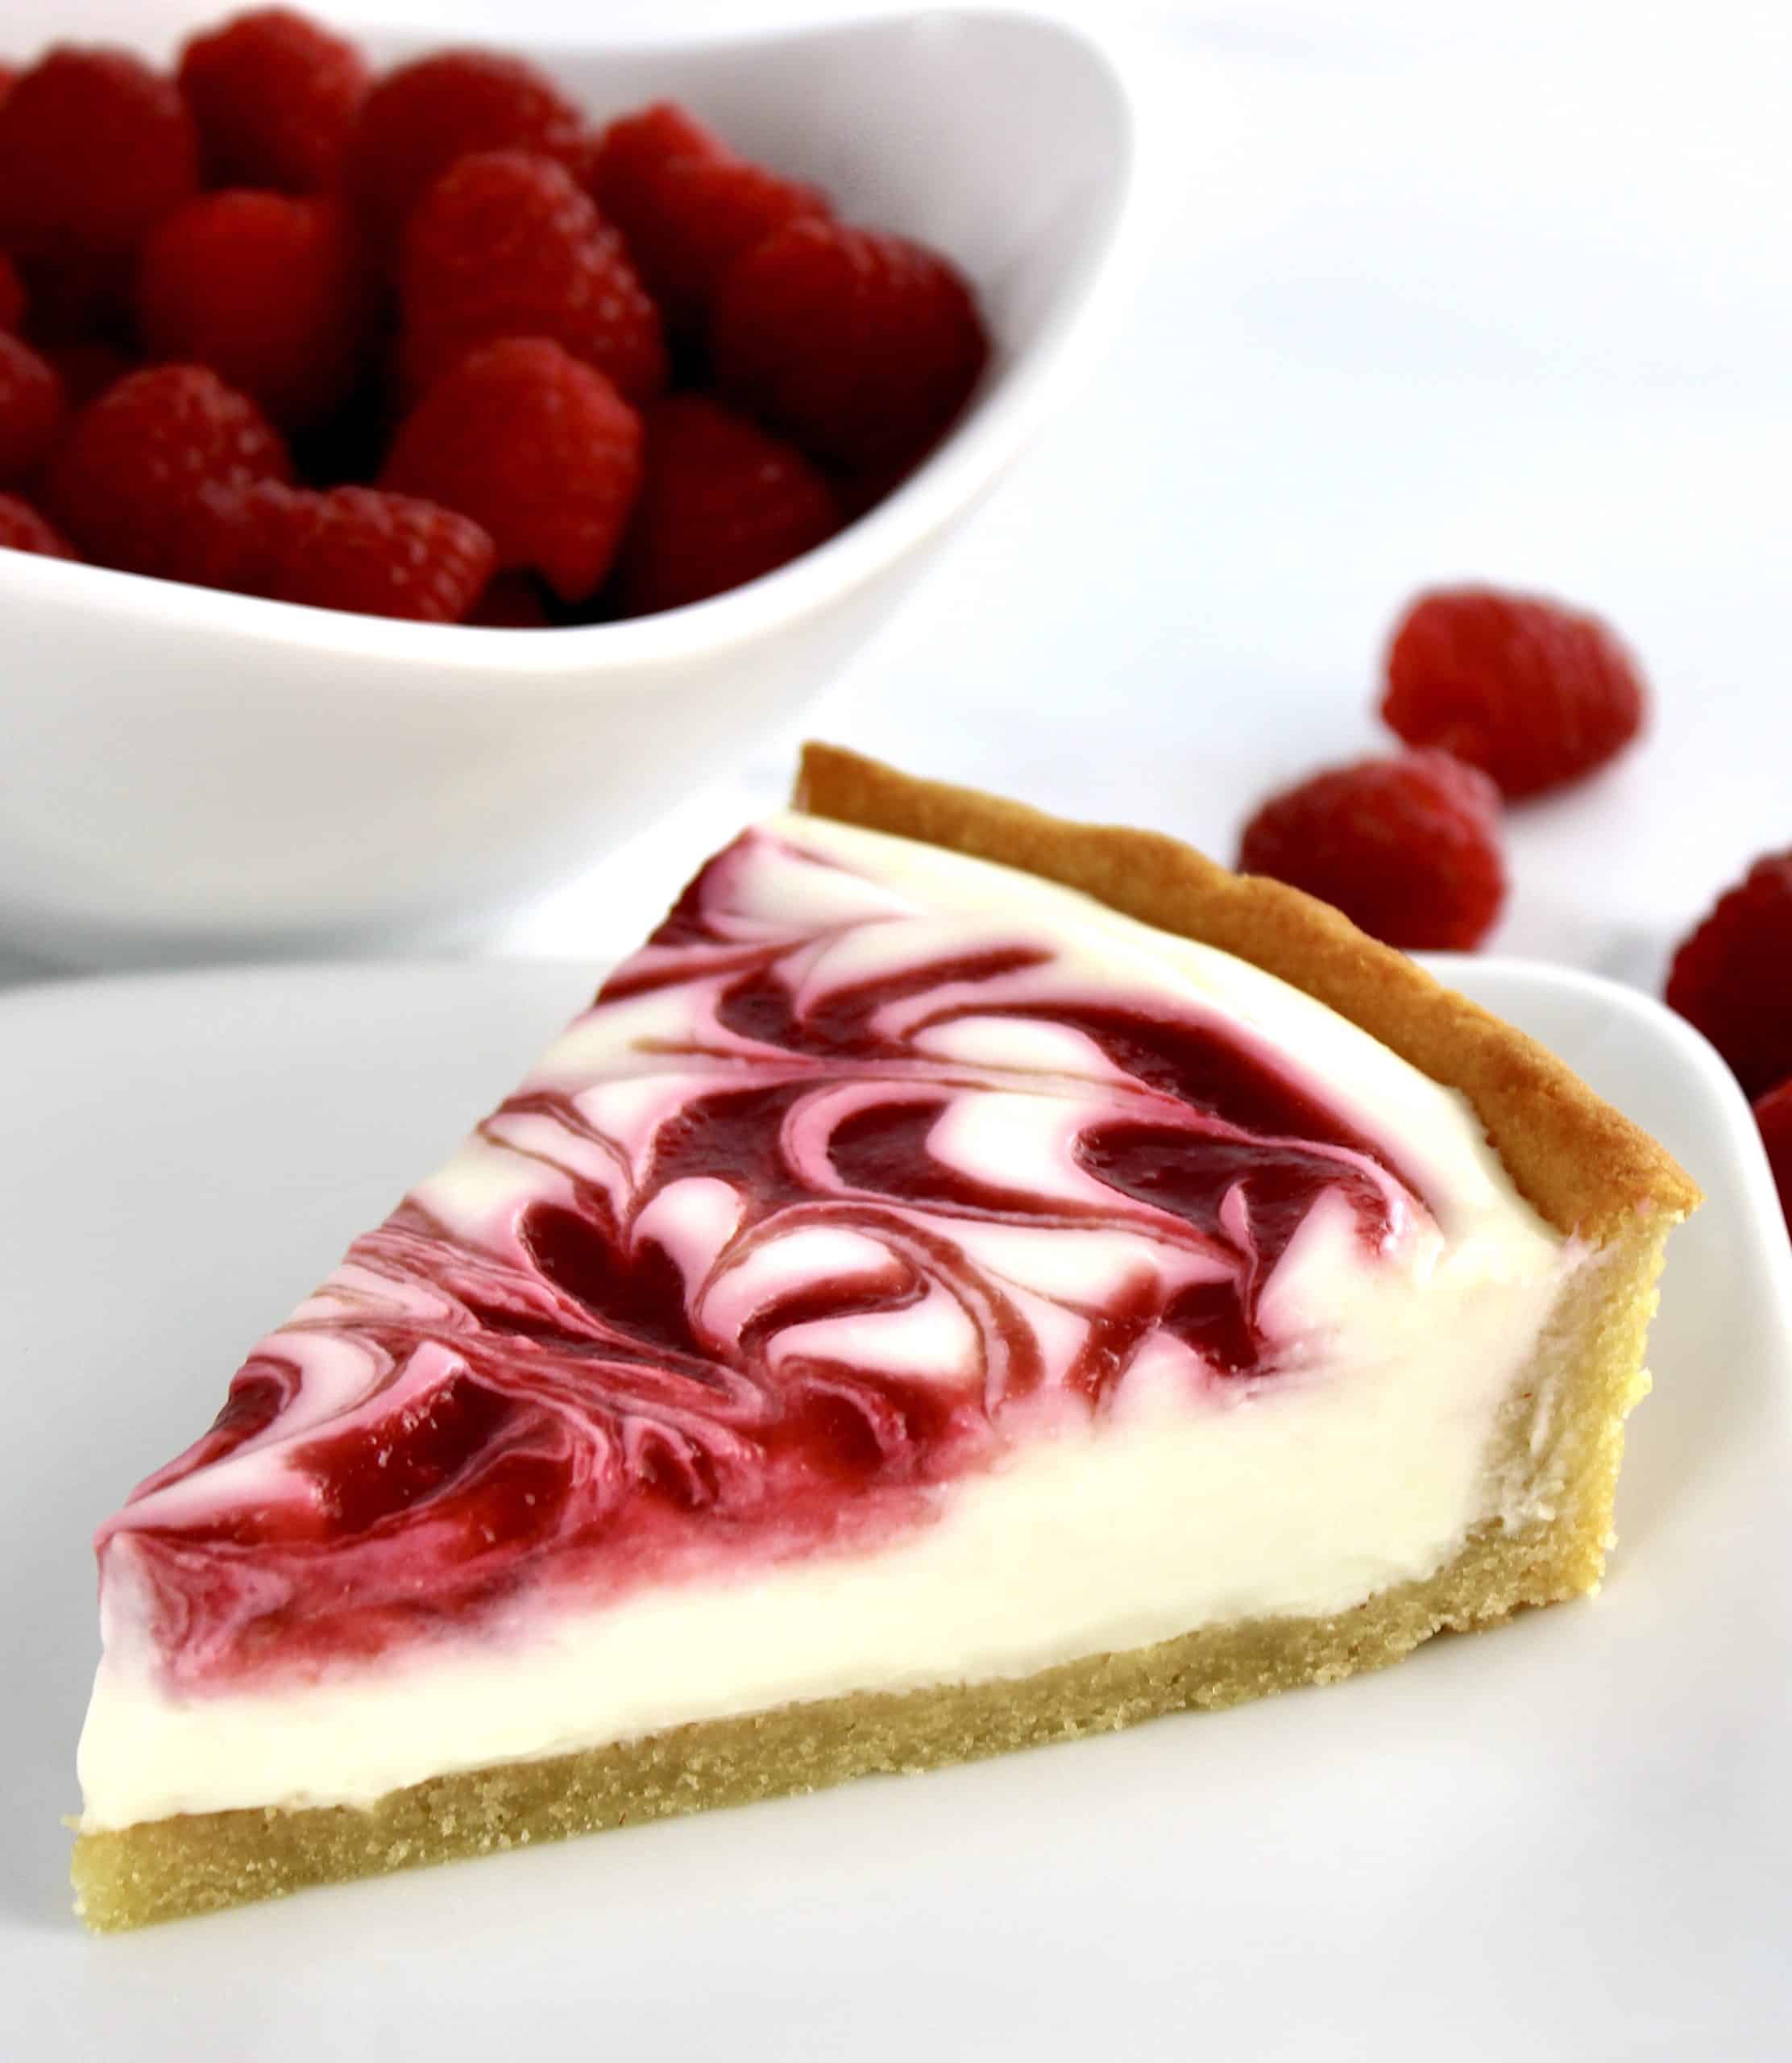 slice of Keto White Chocolate Raspberry Cheesecake on white plate with raspberries in background